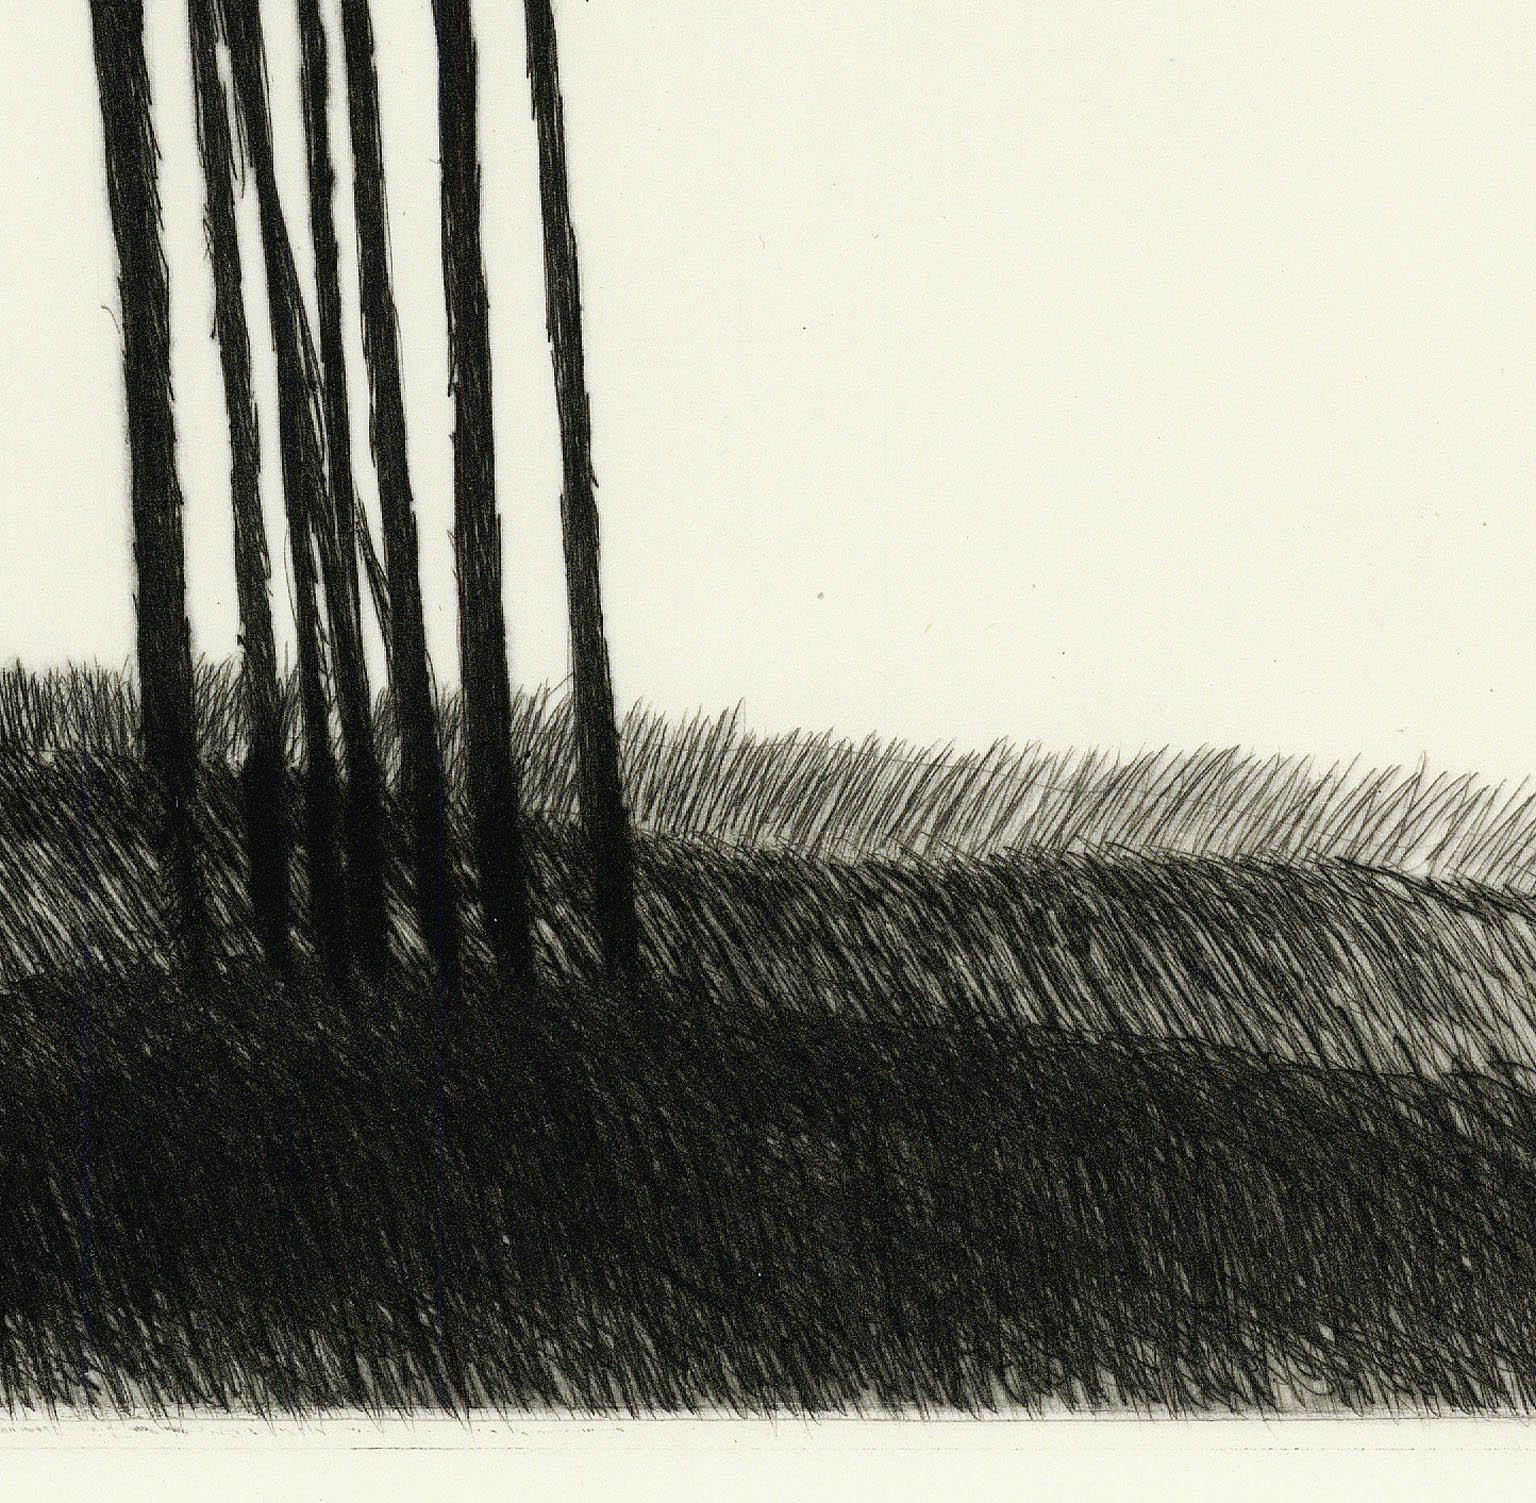 A small copse in a field. - Modern Print by Robert Kipniss